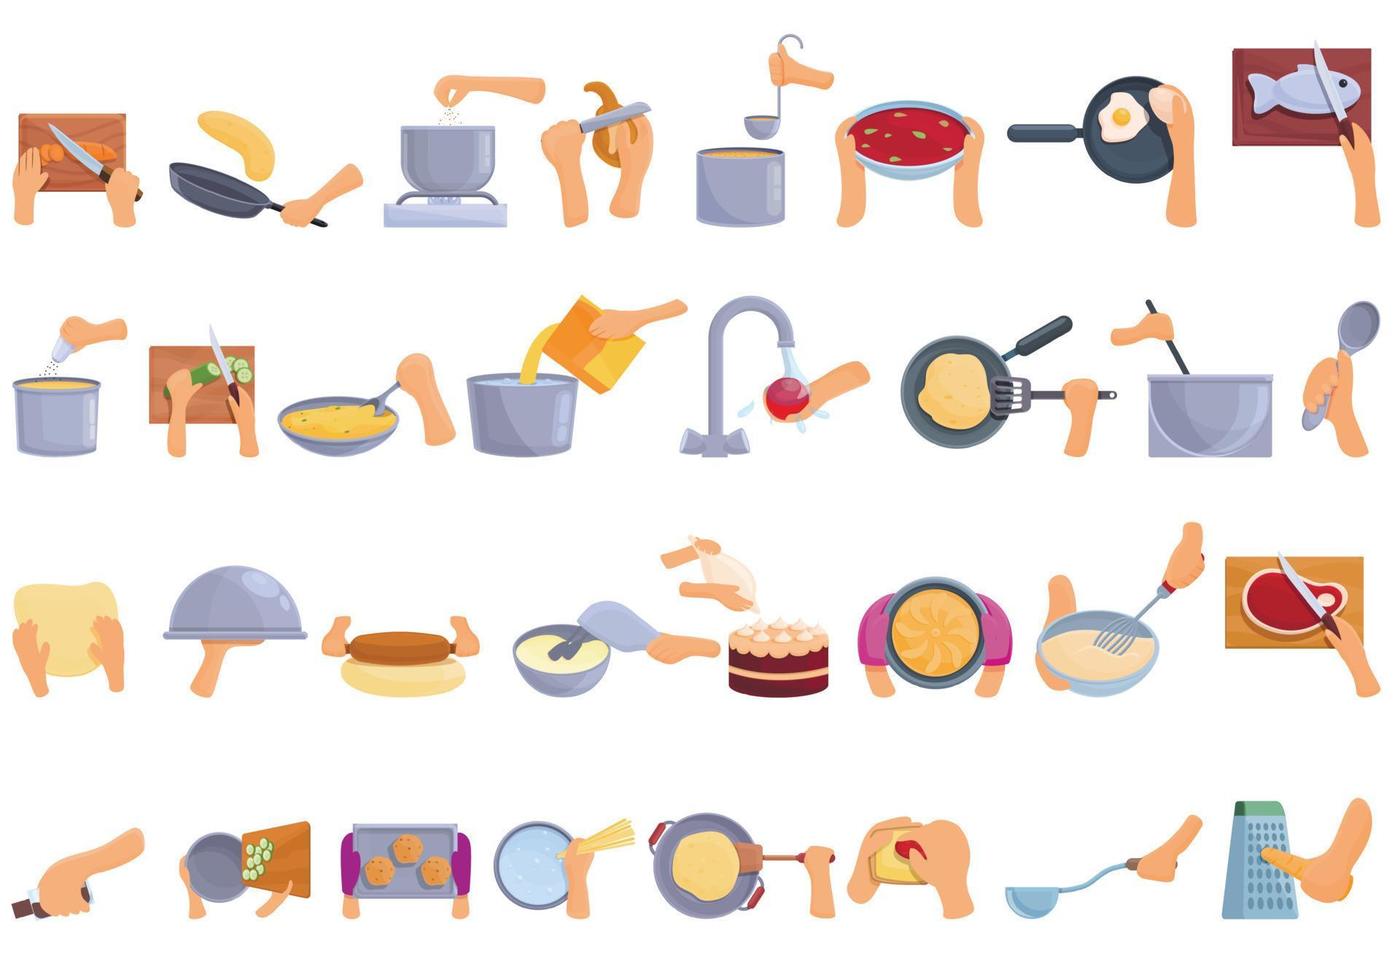 Hands preparing foods icons set, cartoon style vector